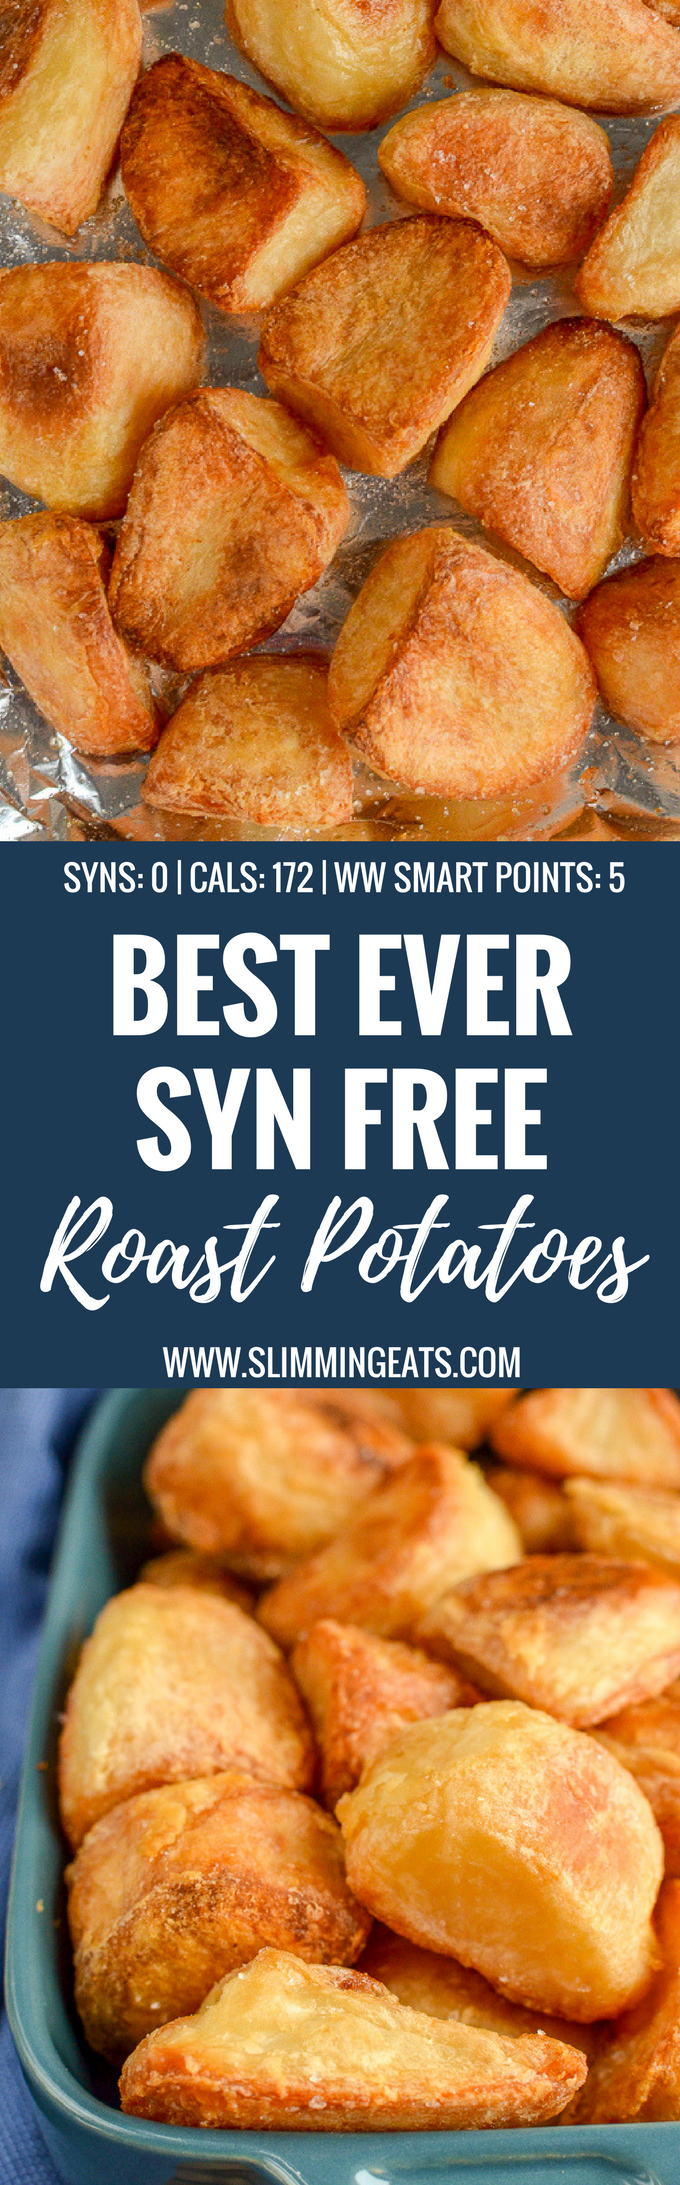 Slimming Eats Best Ever Syn Free Roast Potatoes - gluten free, dairy free, vegetarian, Slimming World or Weight Watchers friendly 